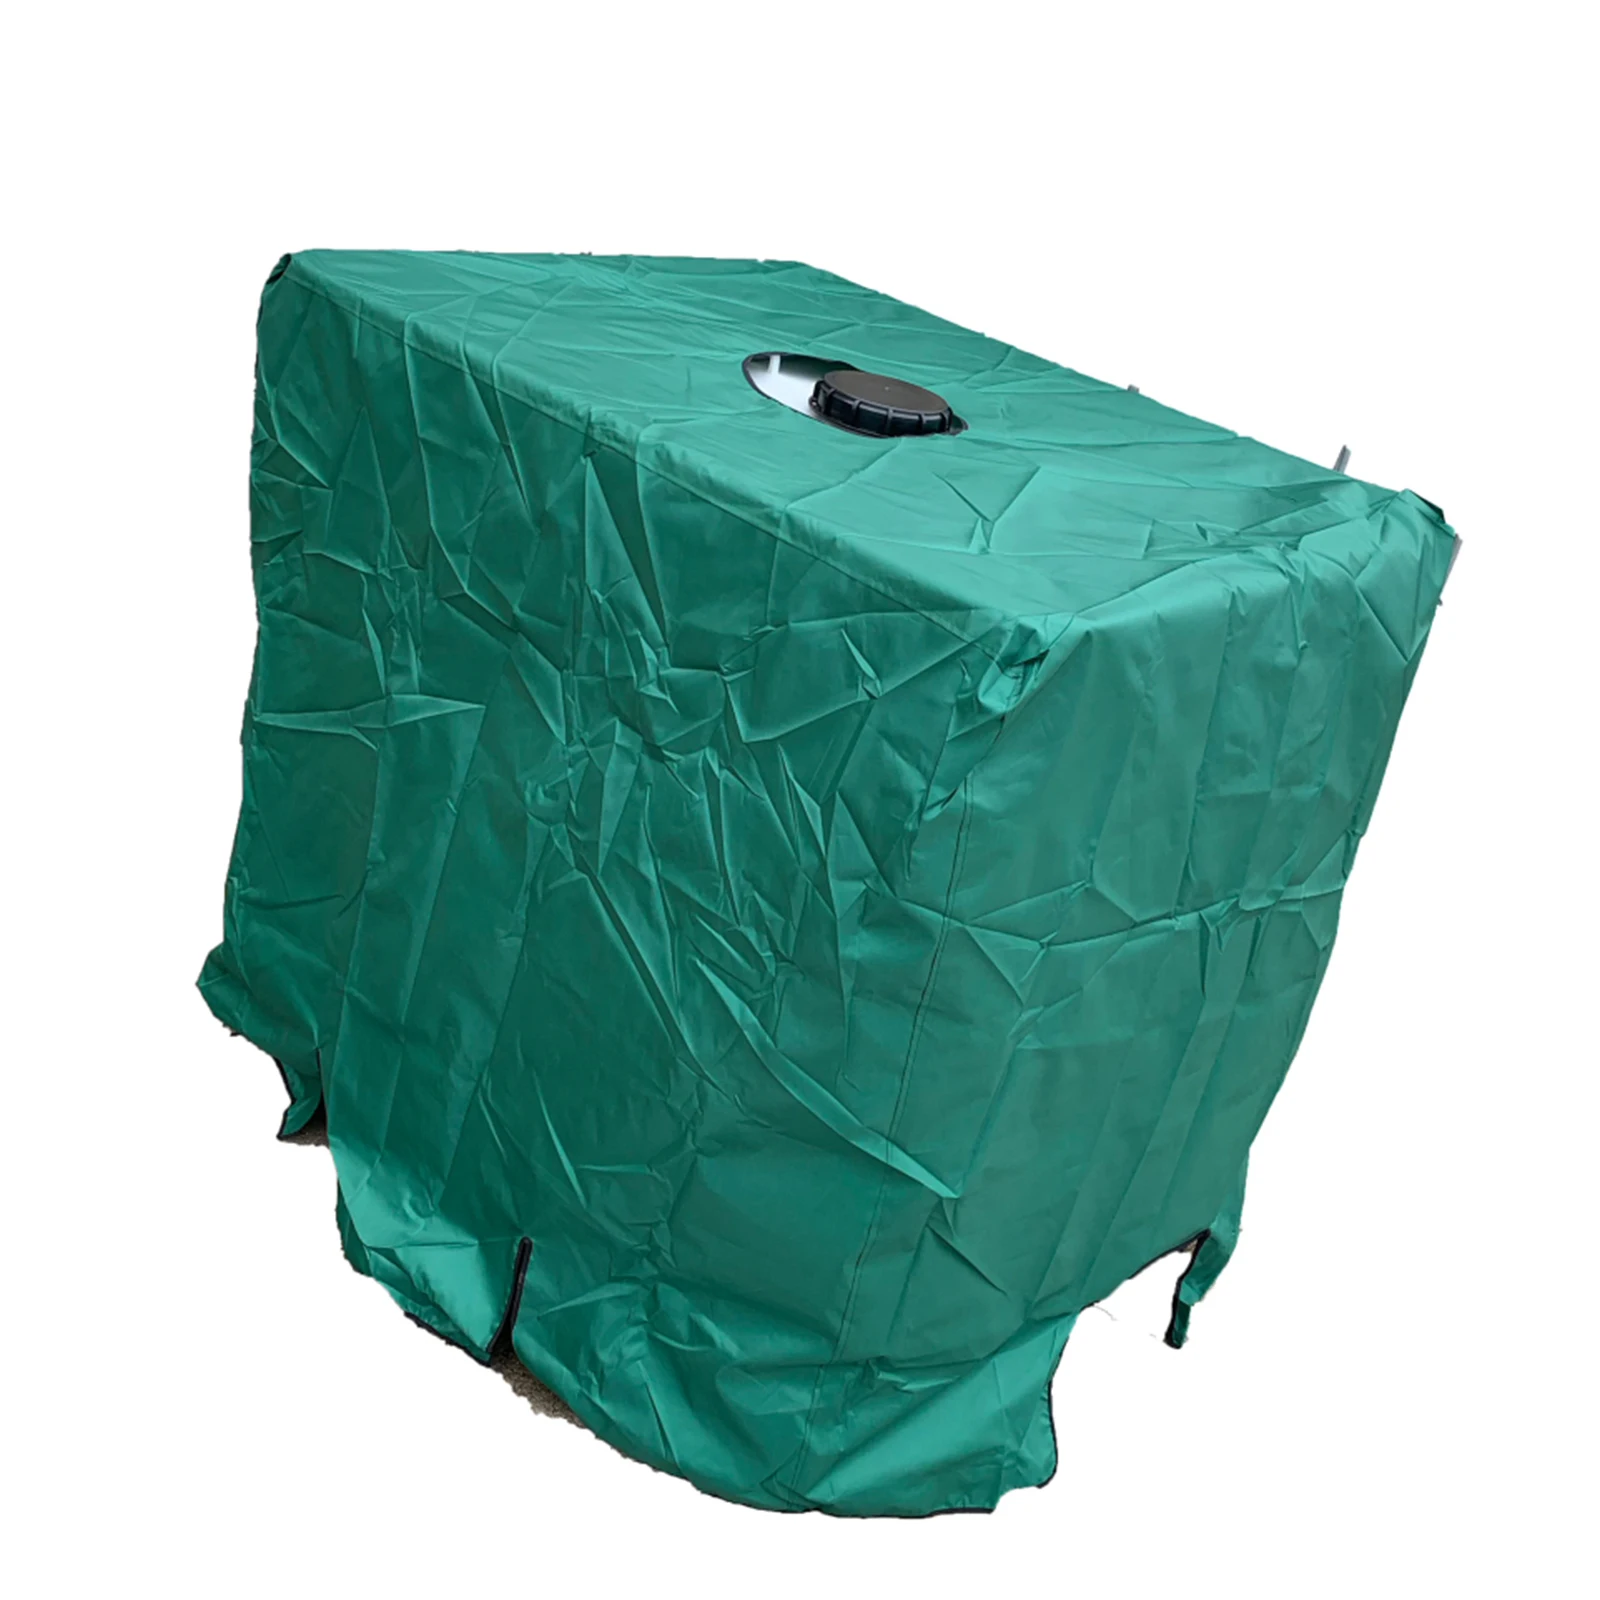 210D Oxford Fabric 1000L IBC Tank Ton Barrel Cover Dustproof Protective Waterproof UV-Resistance Anti-Dust Sunscreen